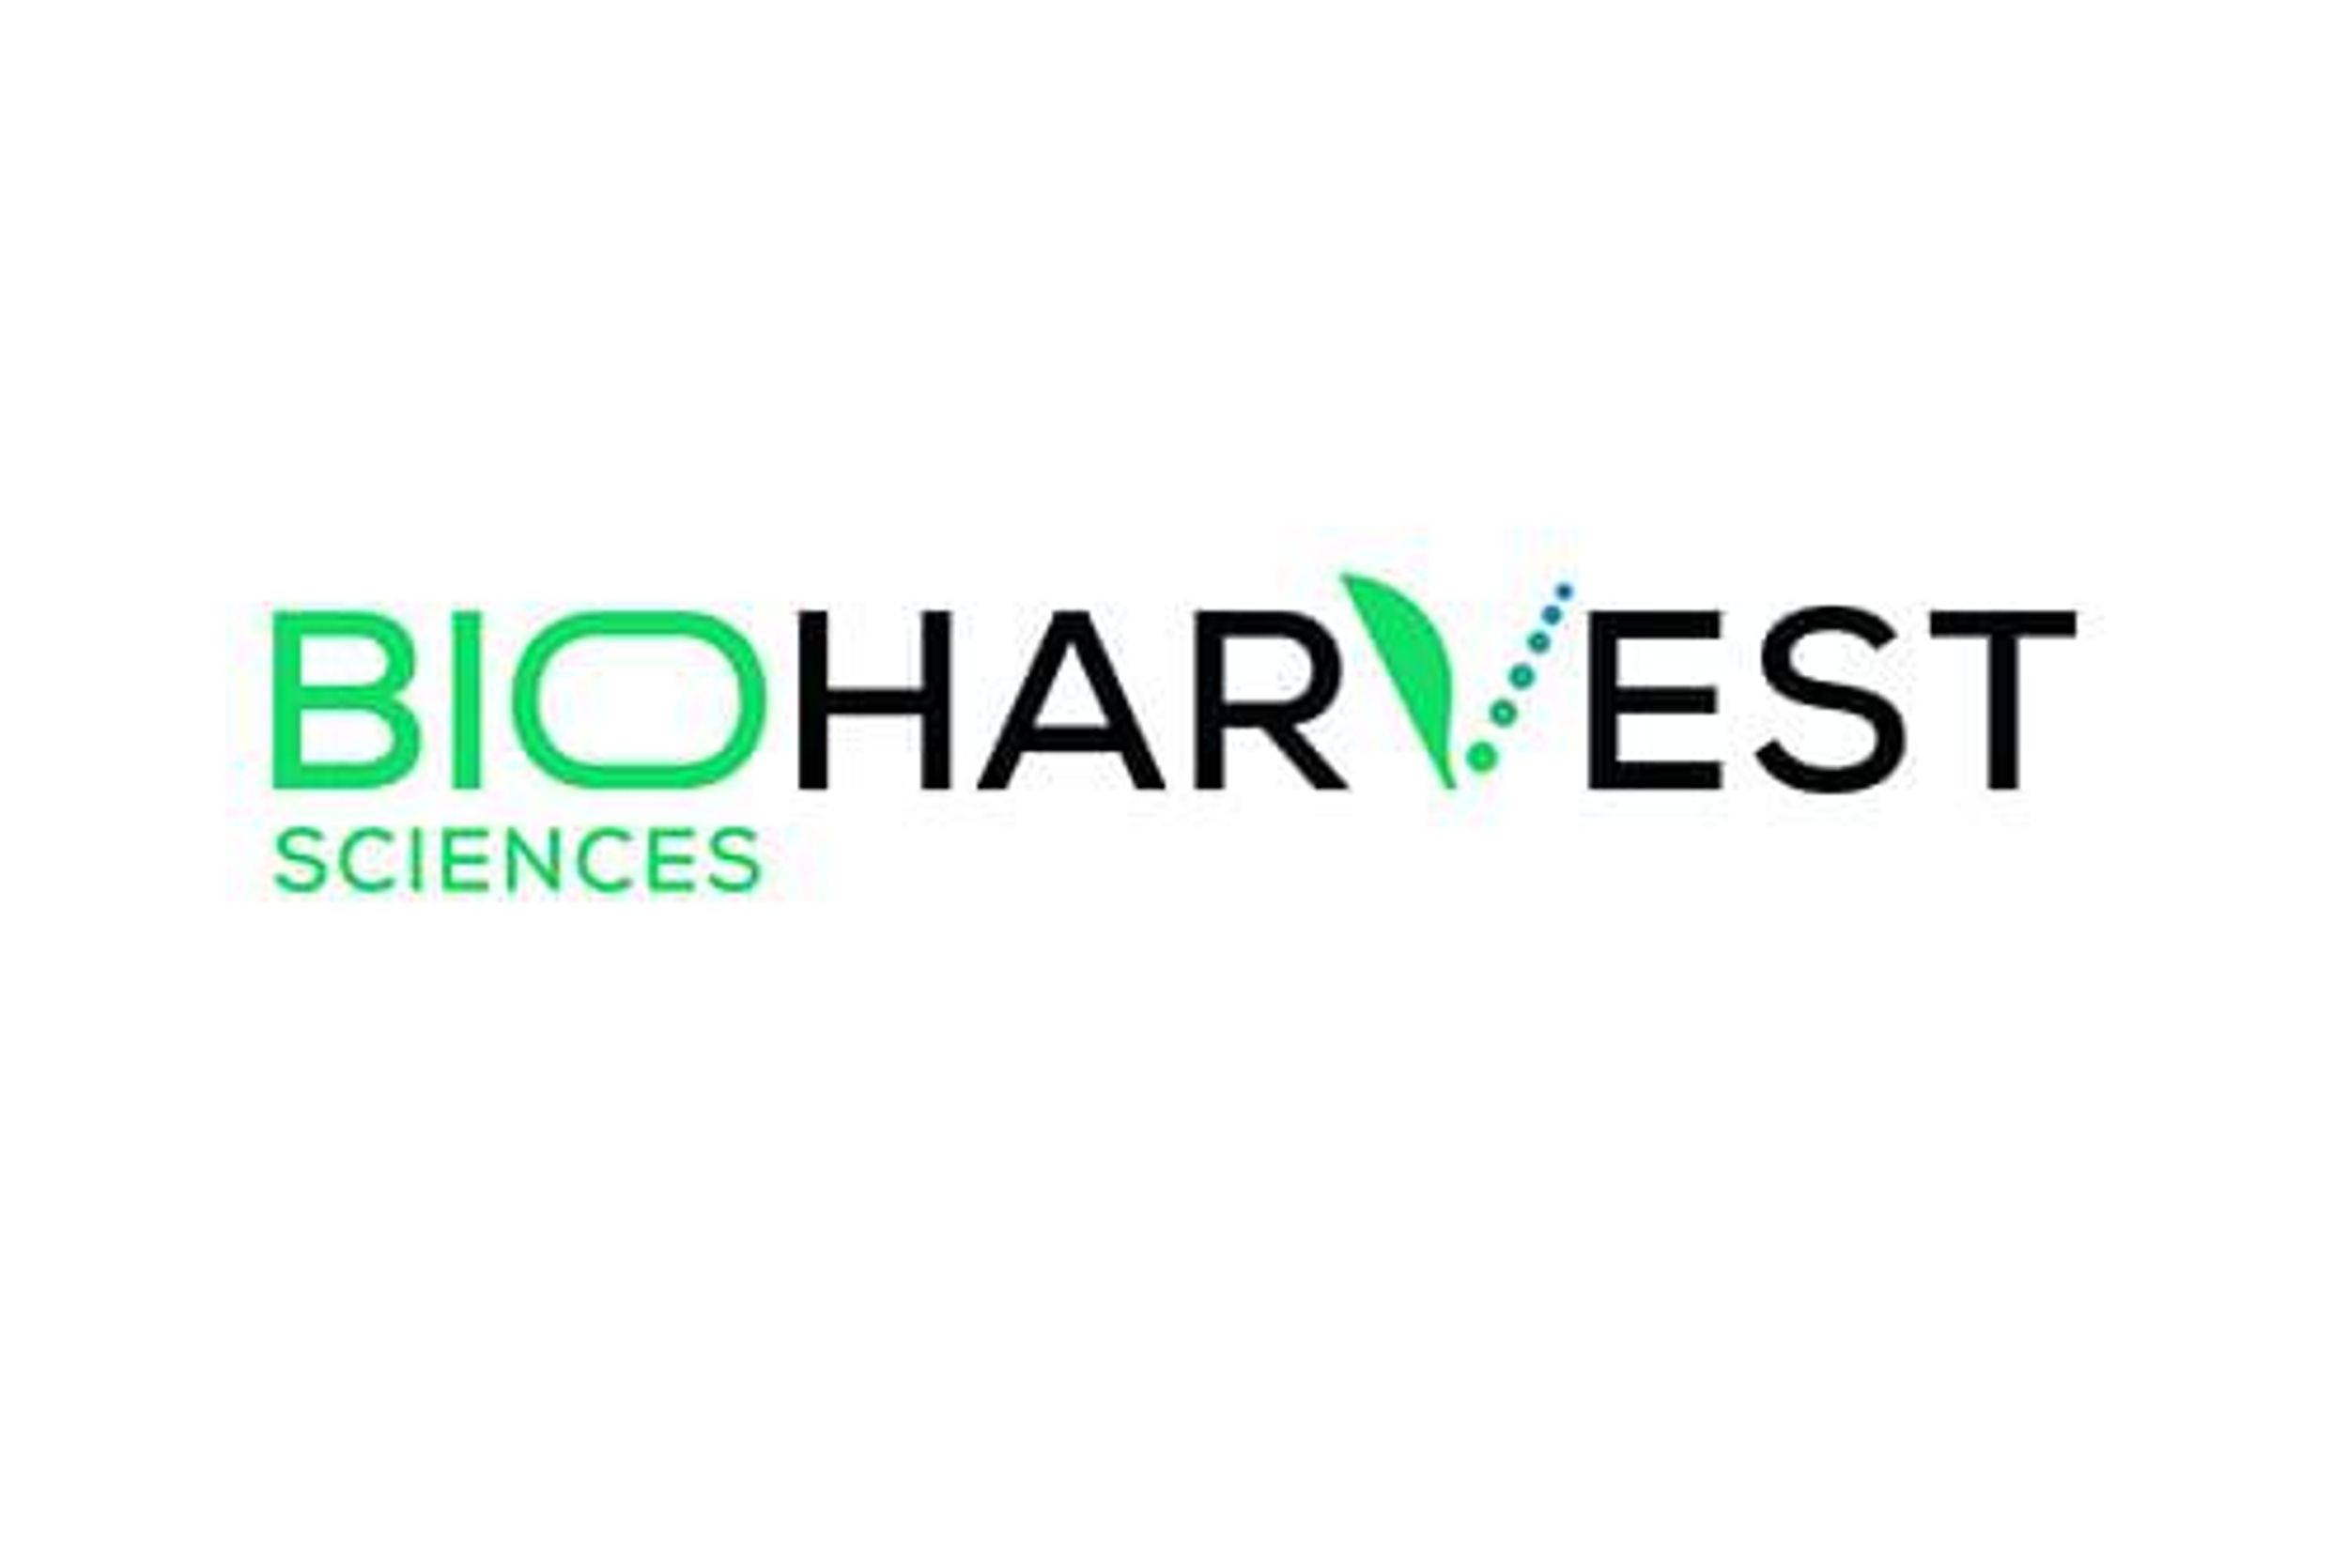 bioharvest sciences stock